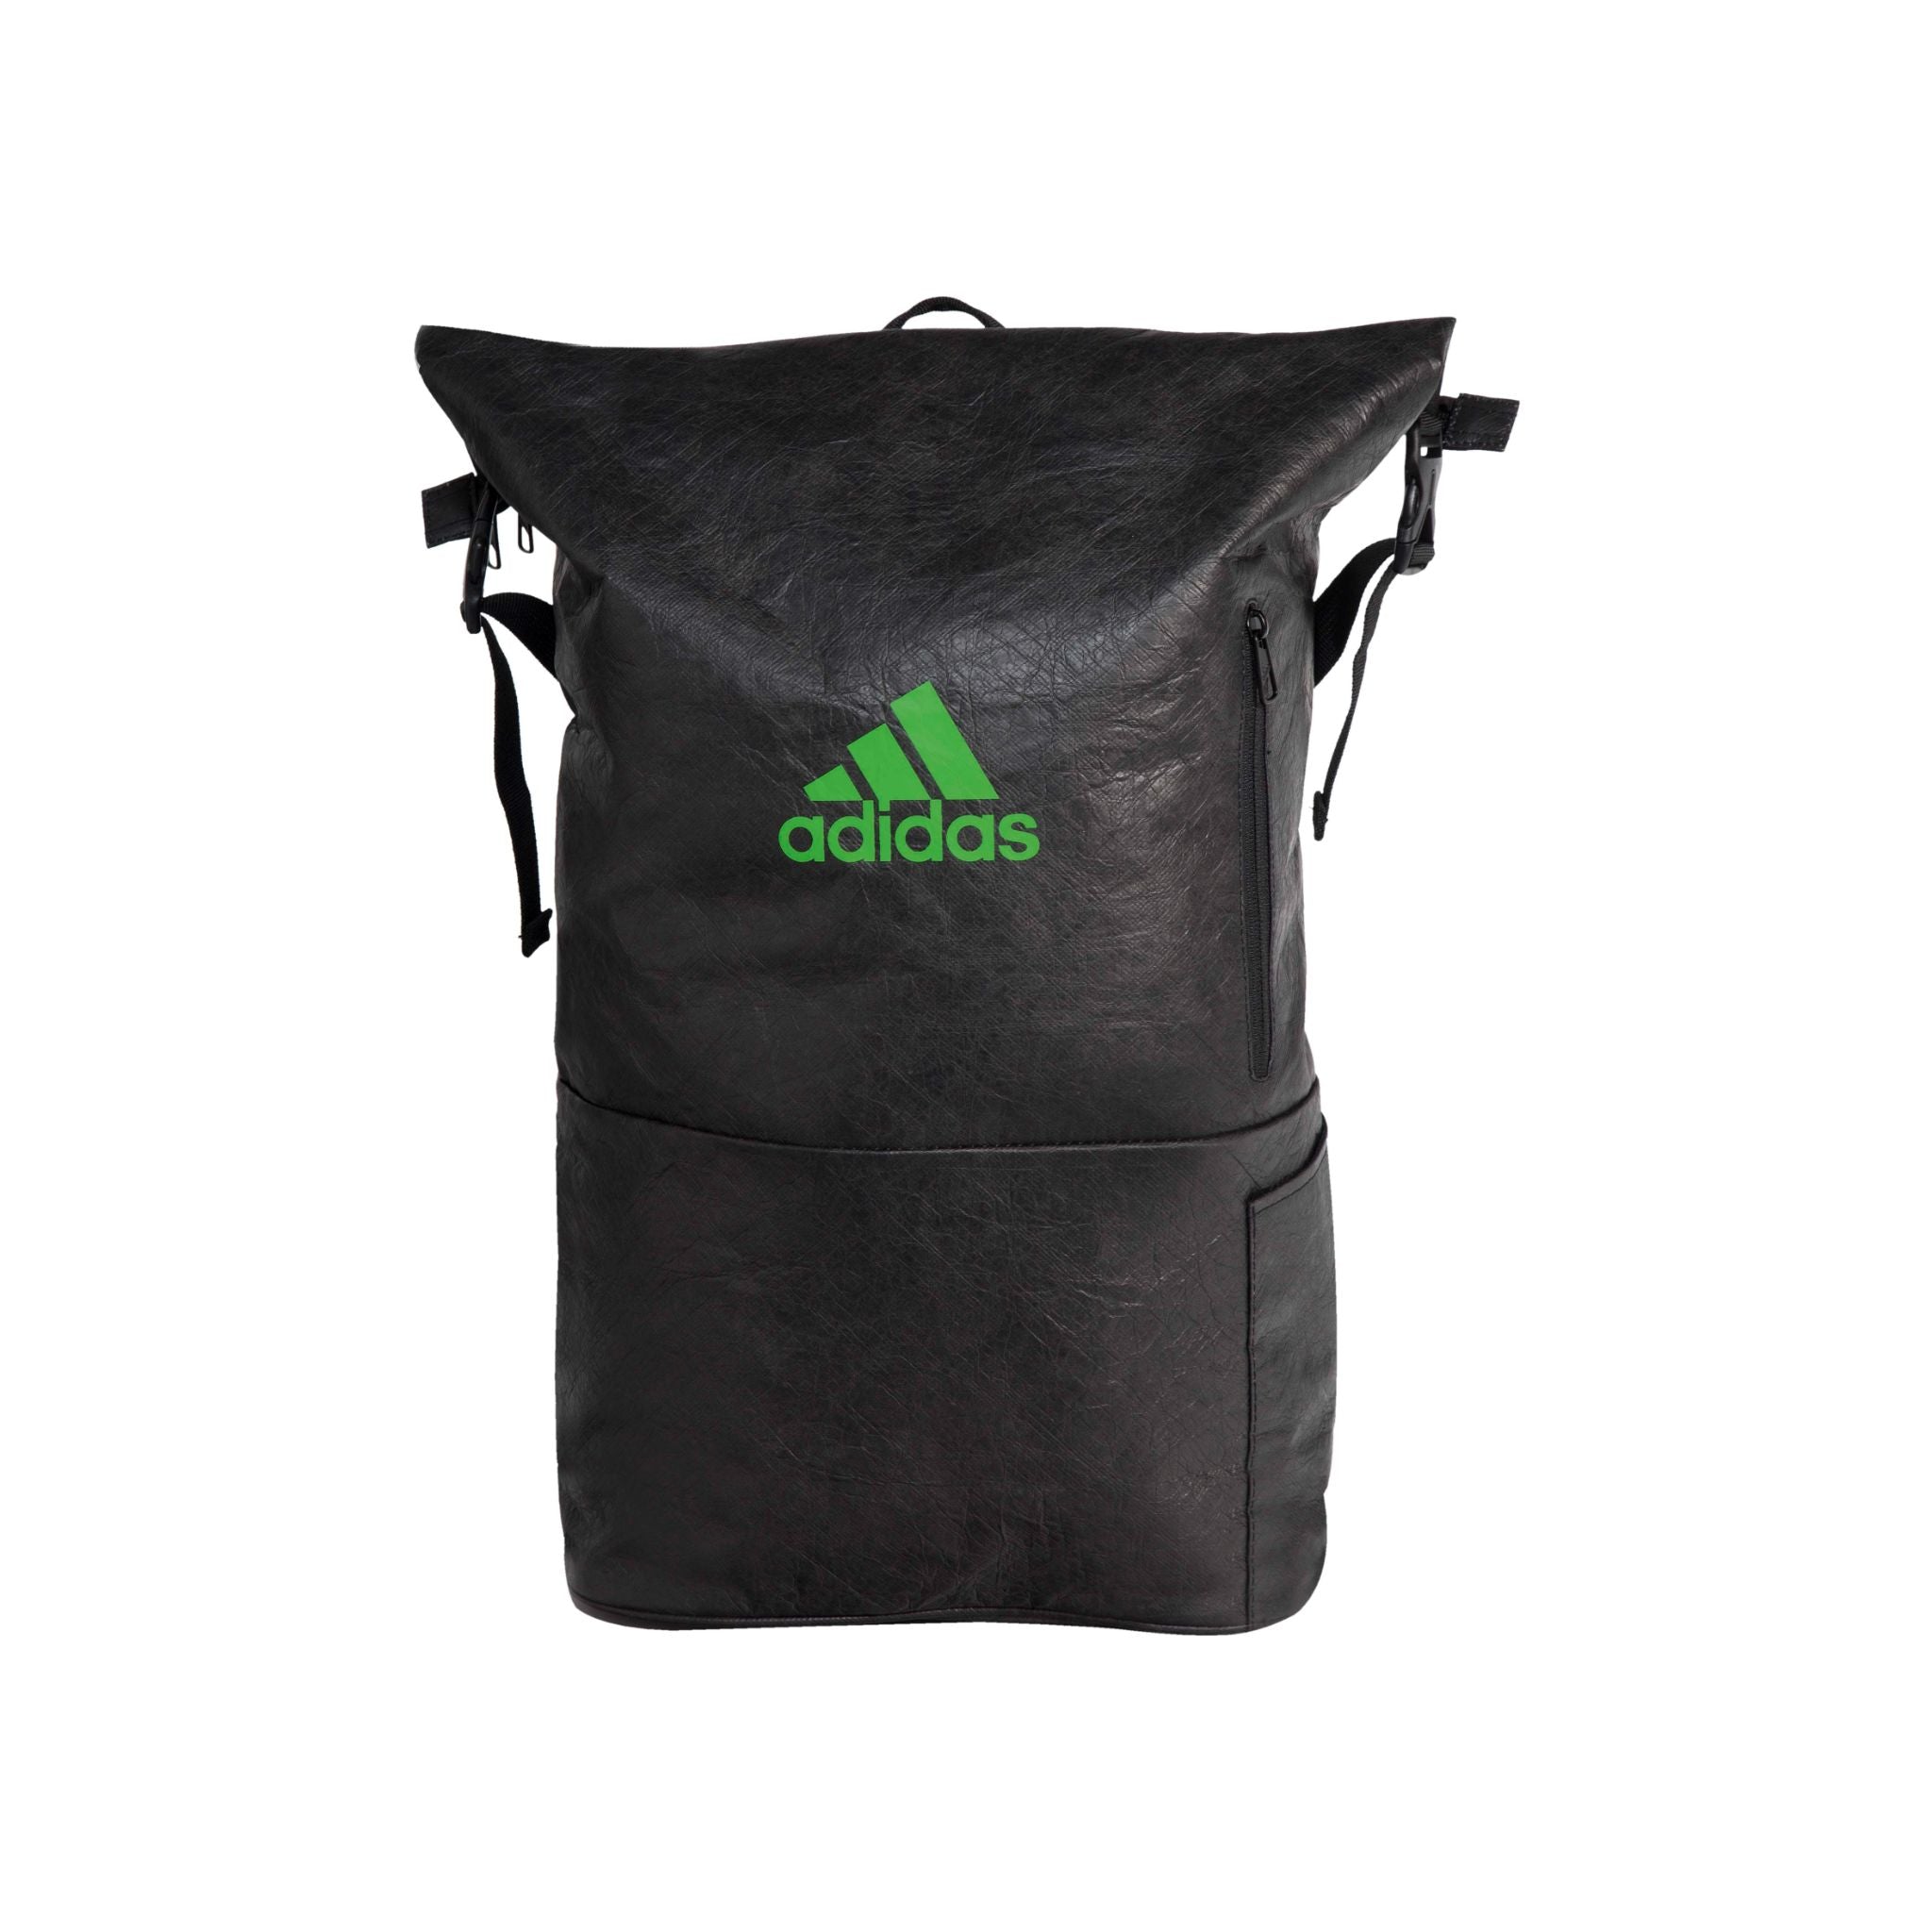 Adidas Backpack Multigame White  Green  thepadelshop